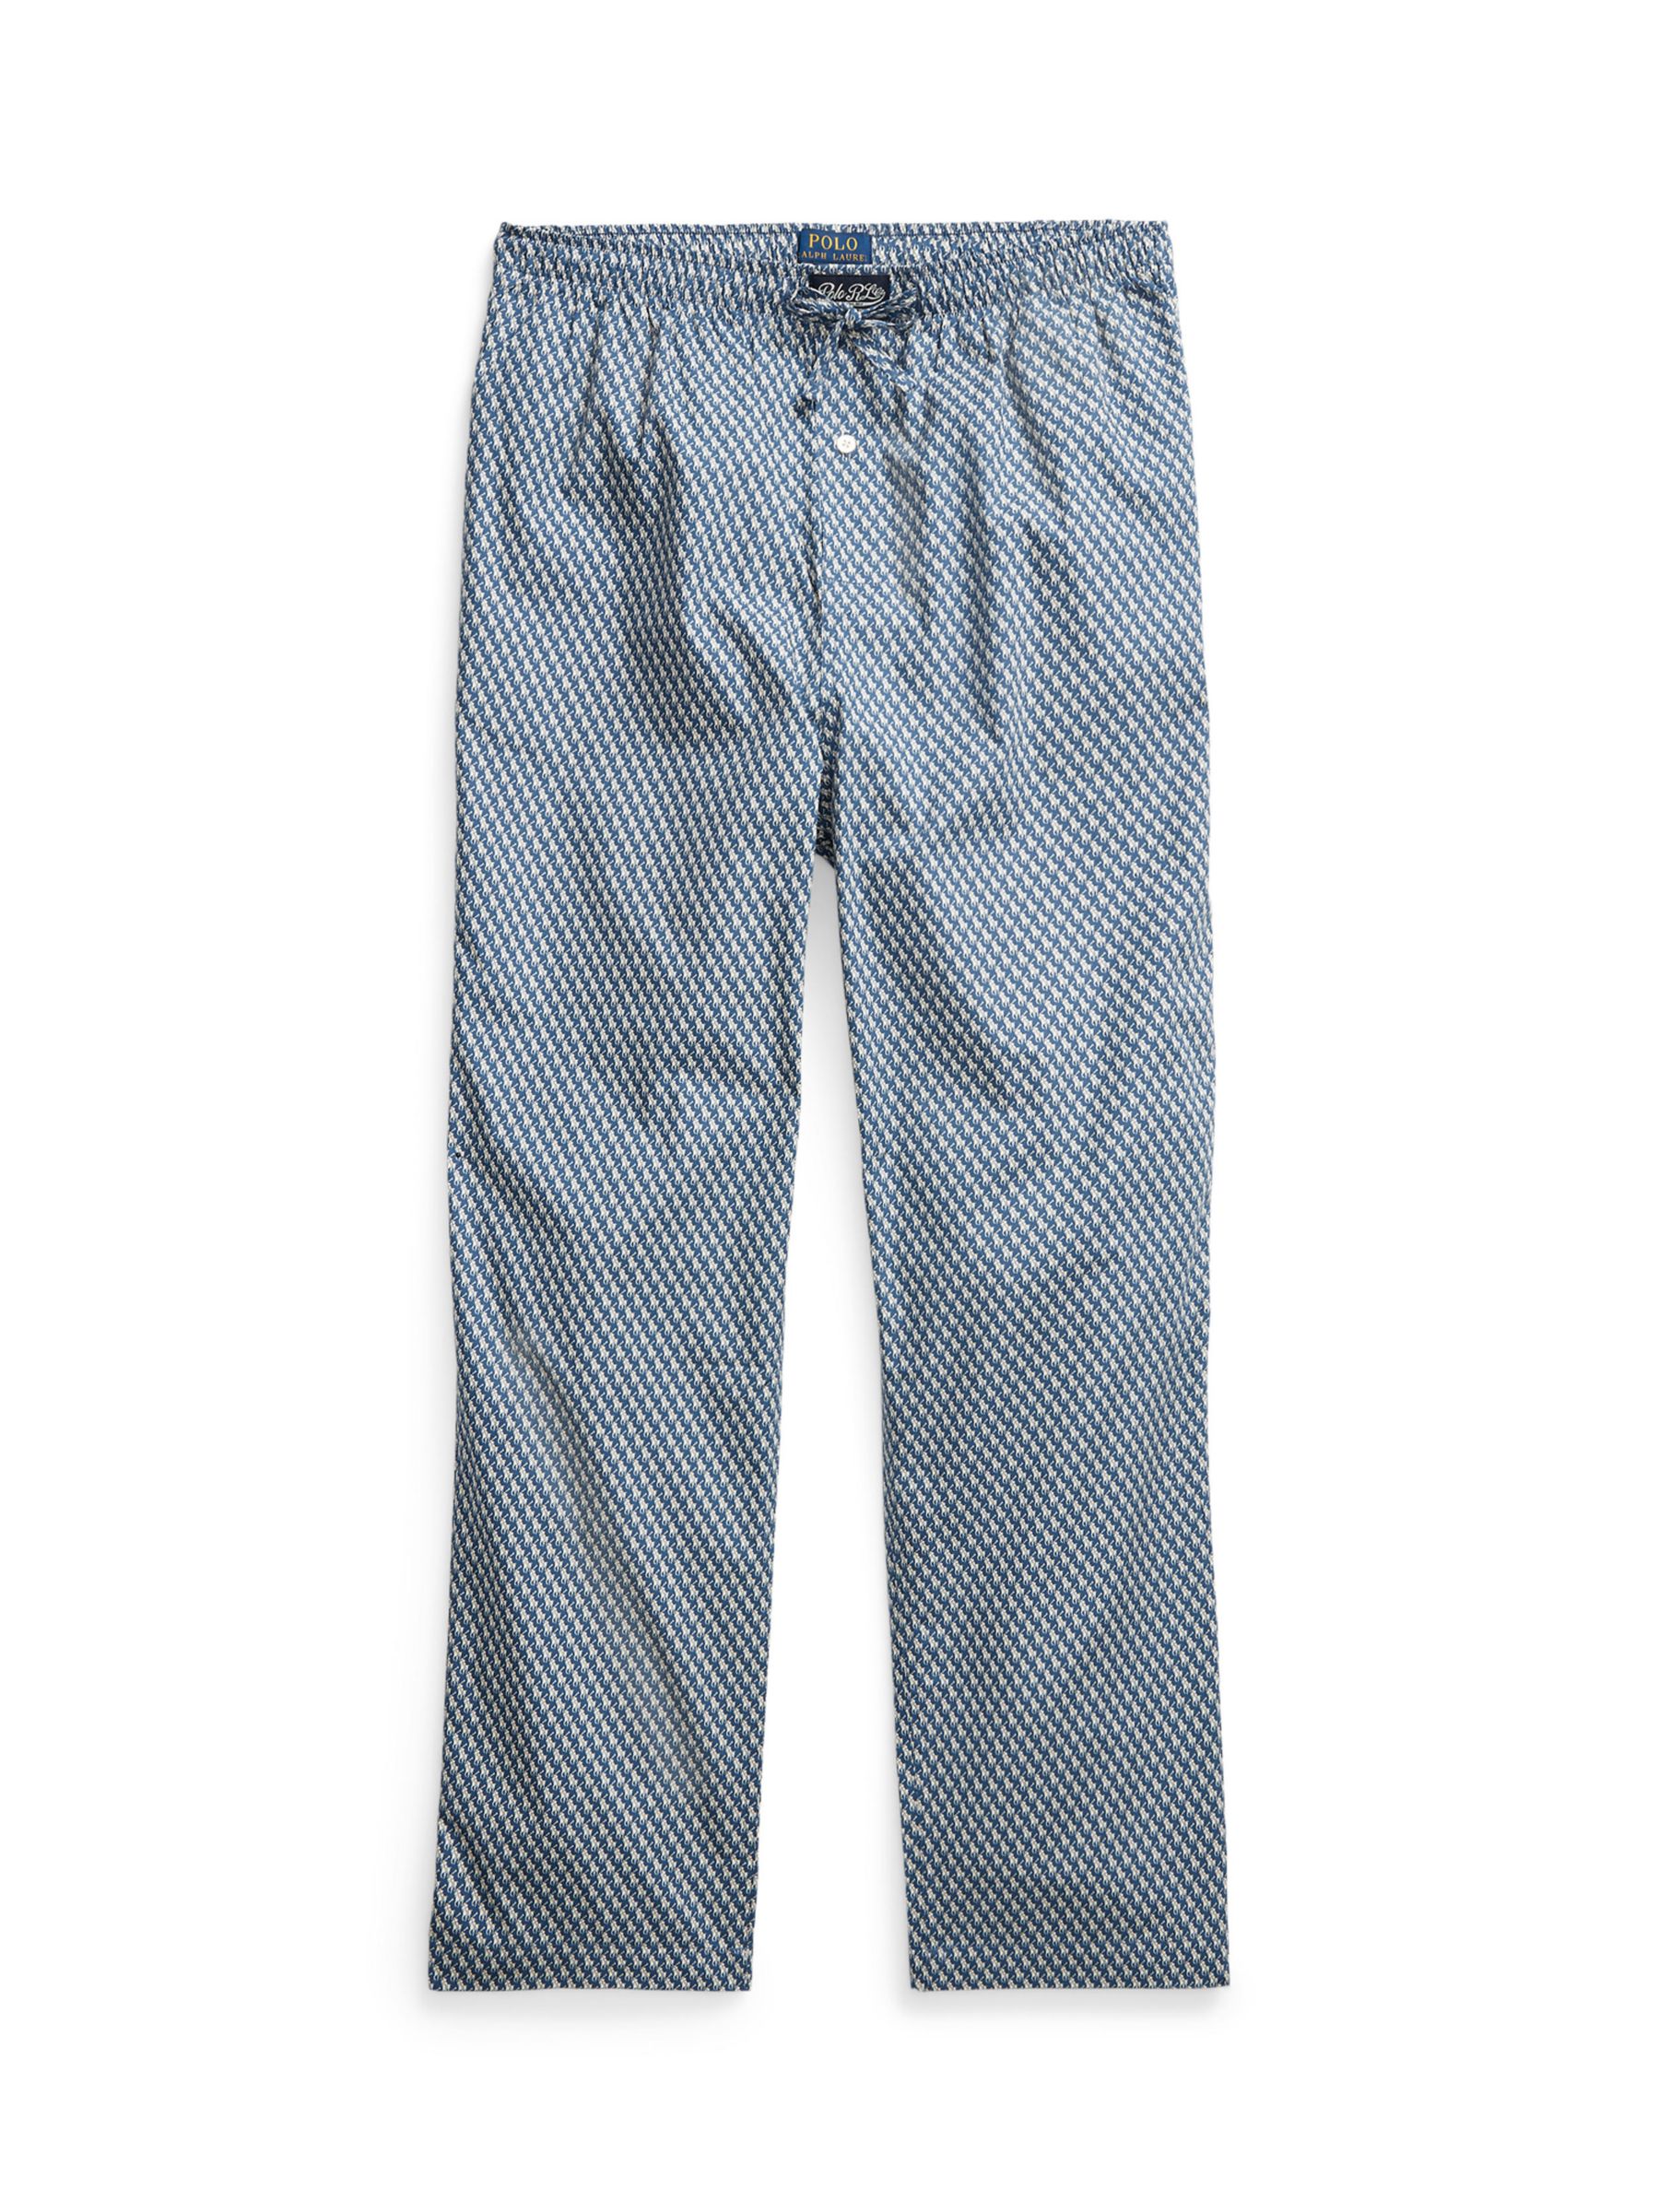 Polo Ralph Lauren Geometric Pyjamas Pants, Clancy Blue at John Lewis ...